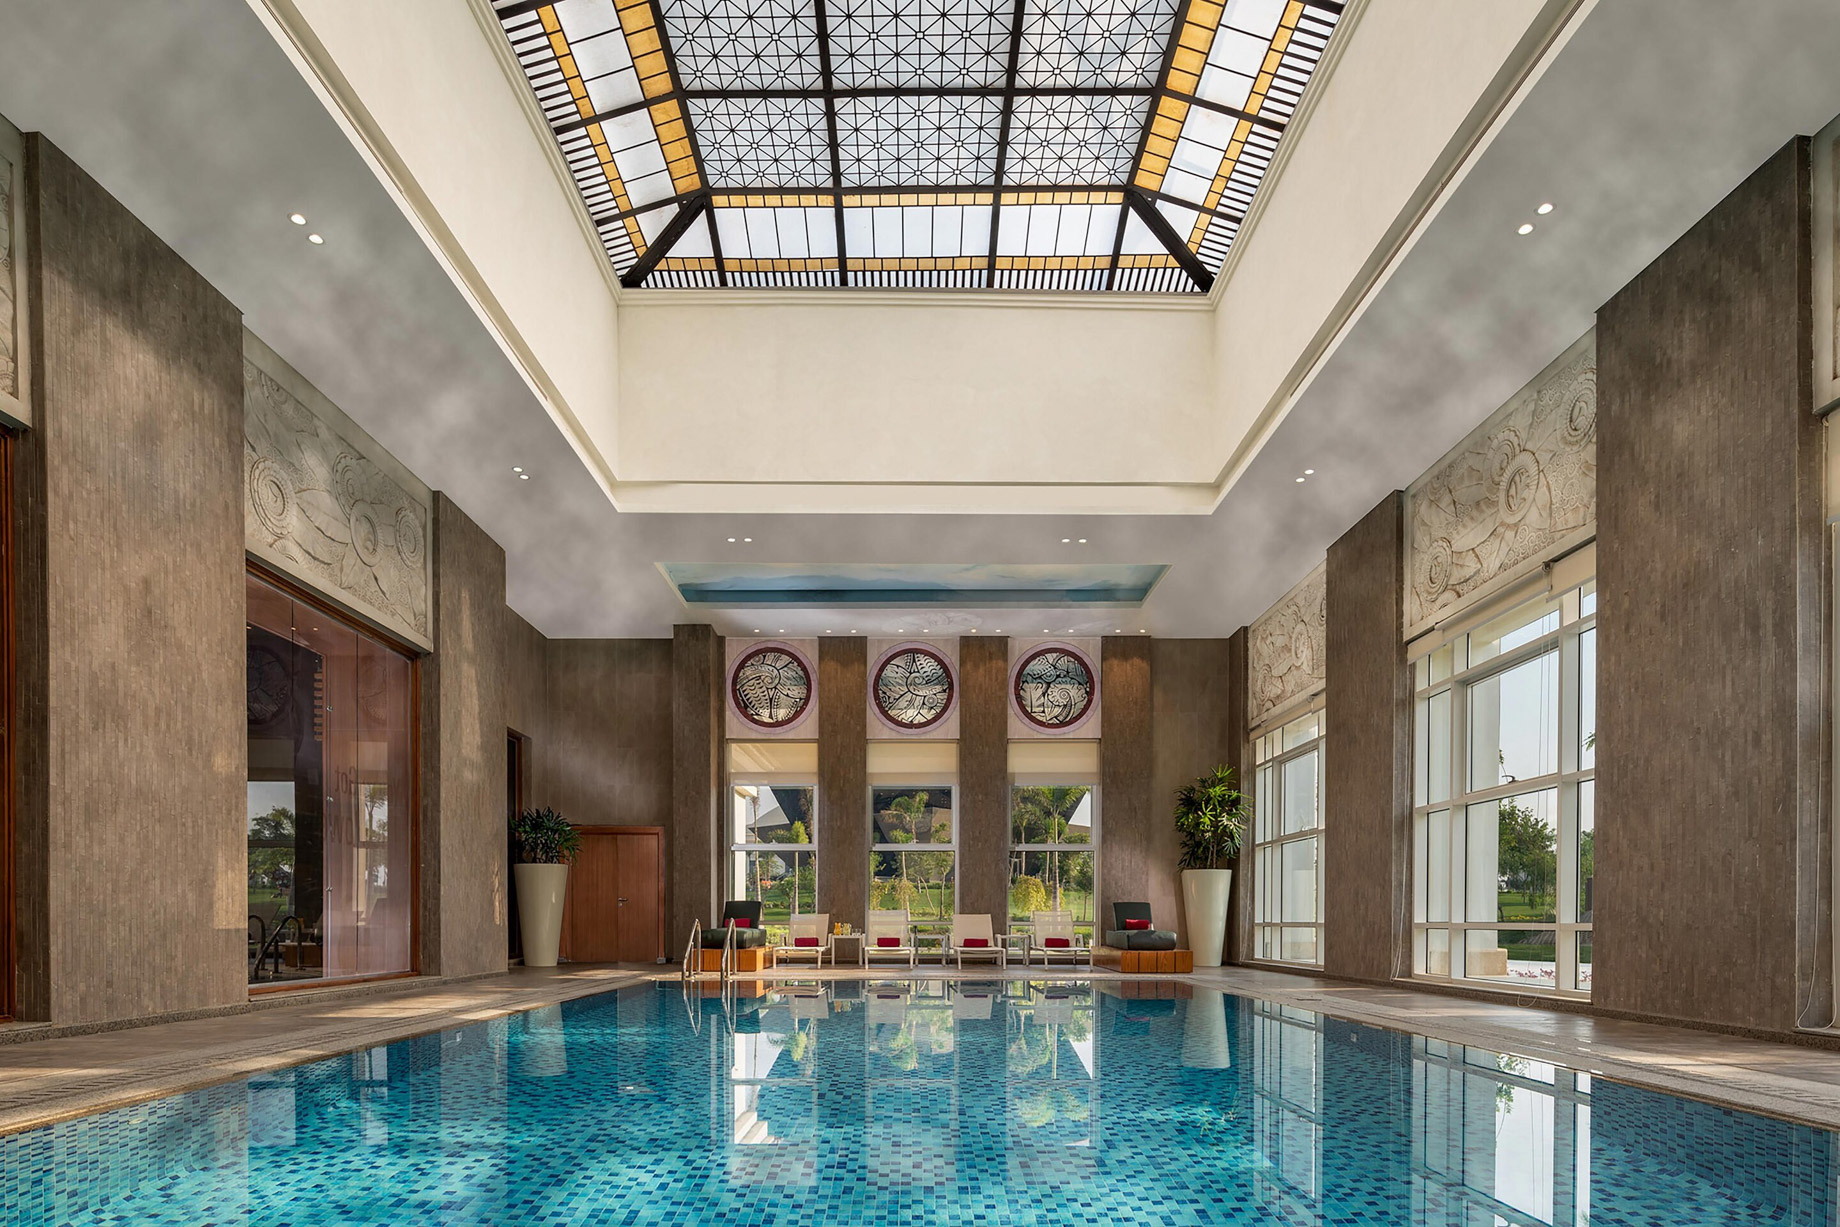 The St. Regis Almasa Hotel – Cairo, Egypt – The Indoor Swimming Pool